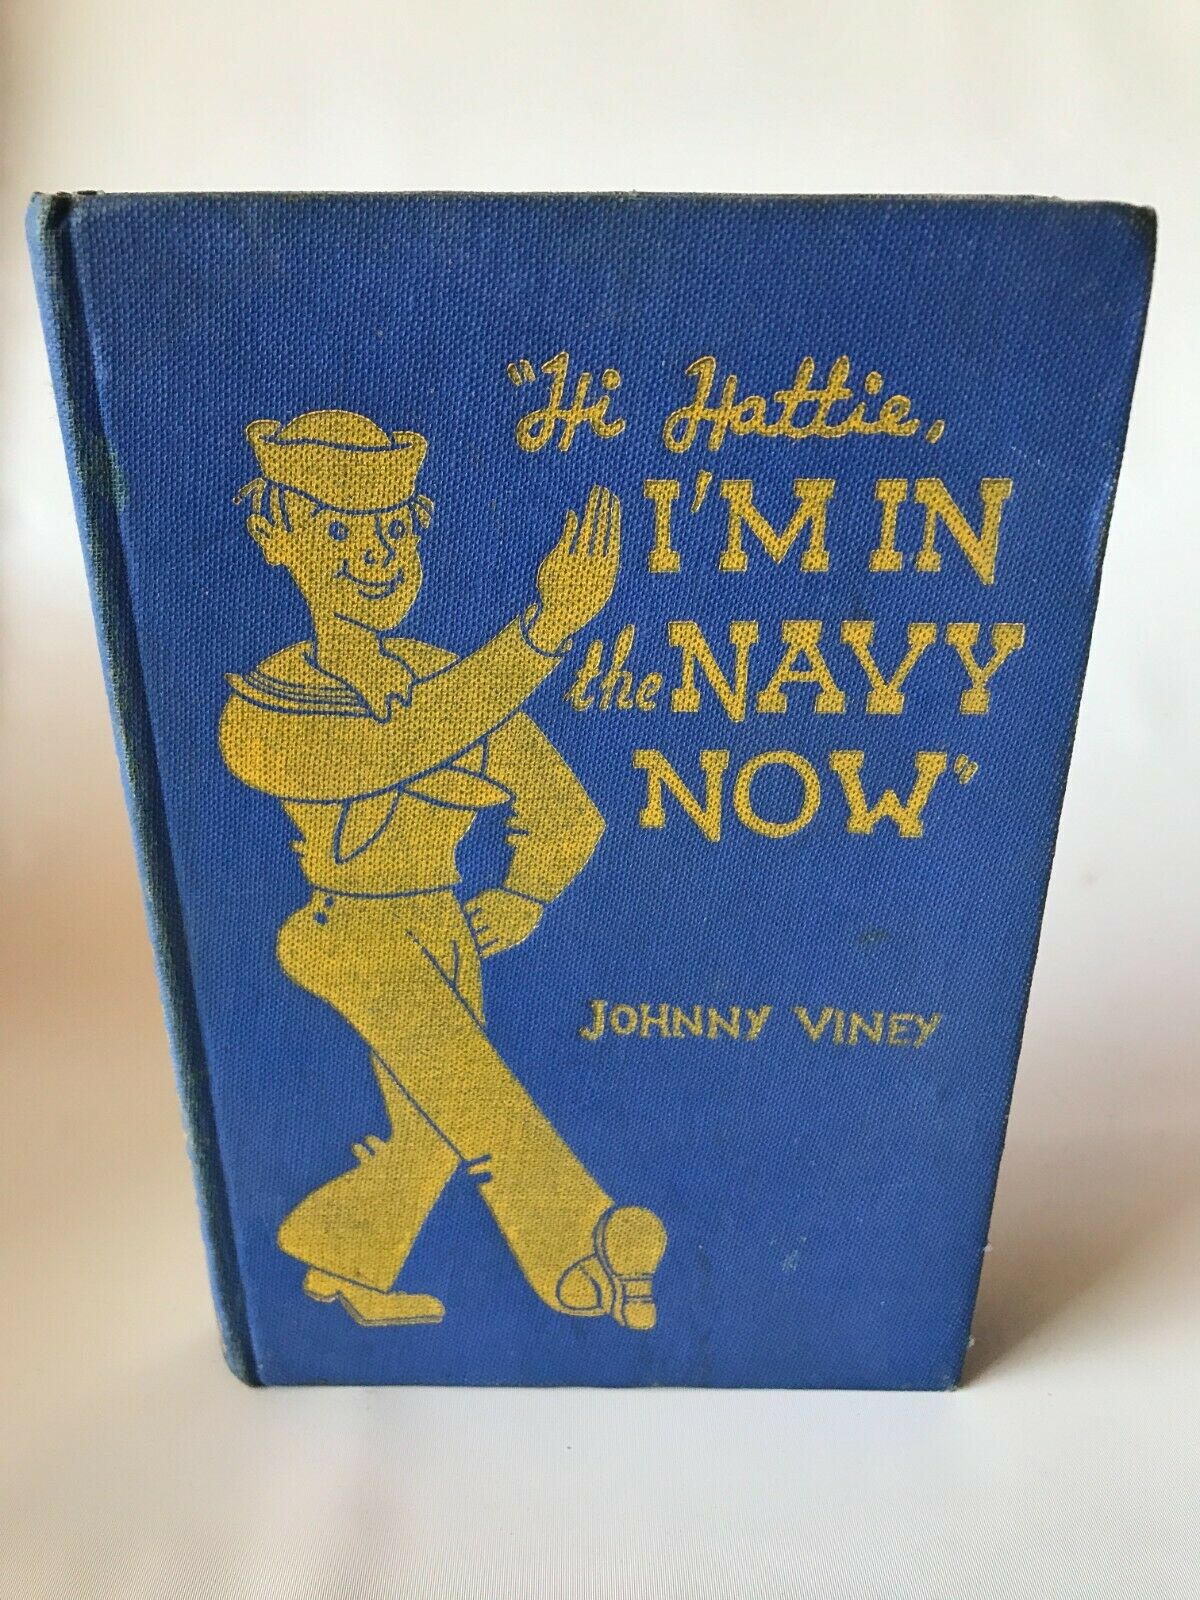 Hi Hattie I’m in the Navy Now by Johnny Viney 1941